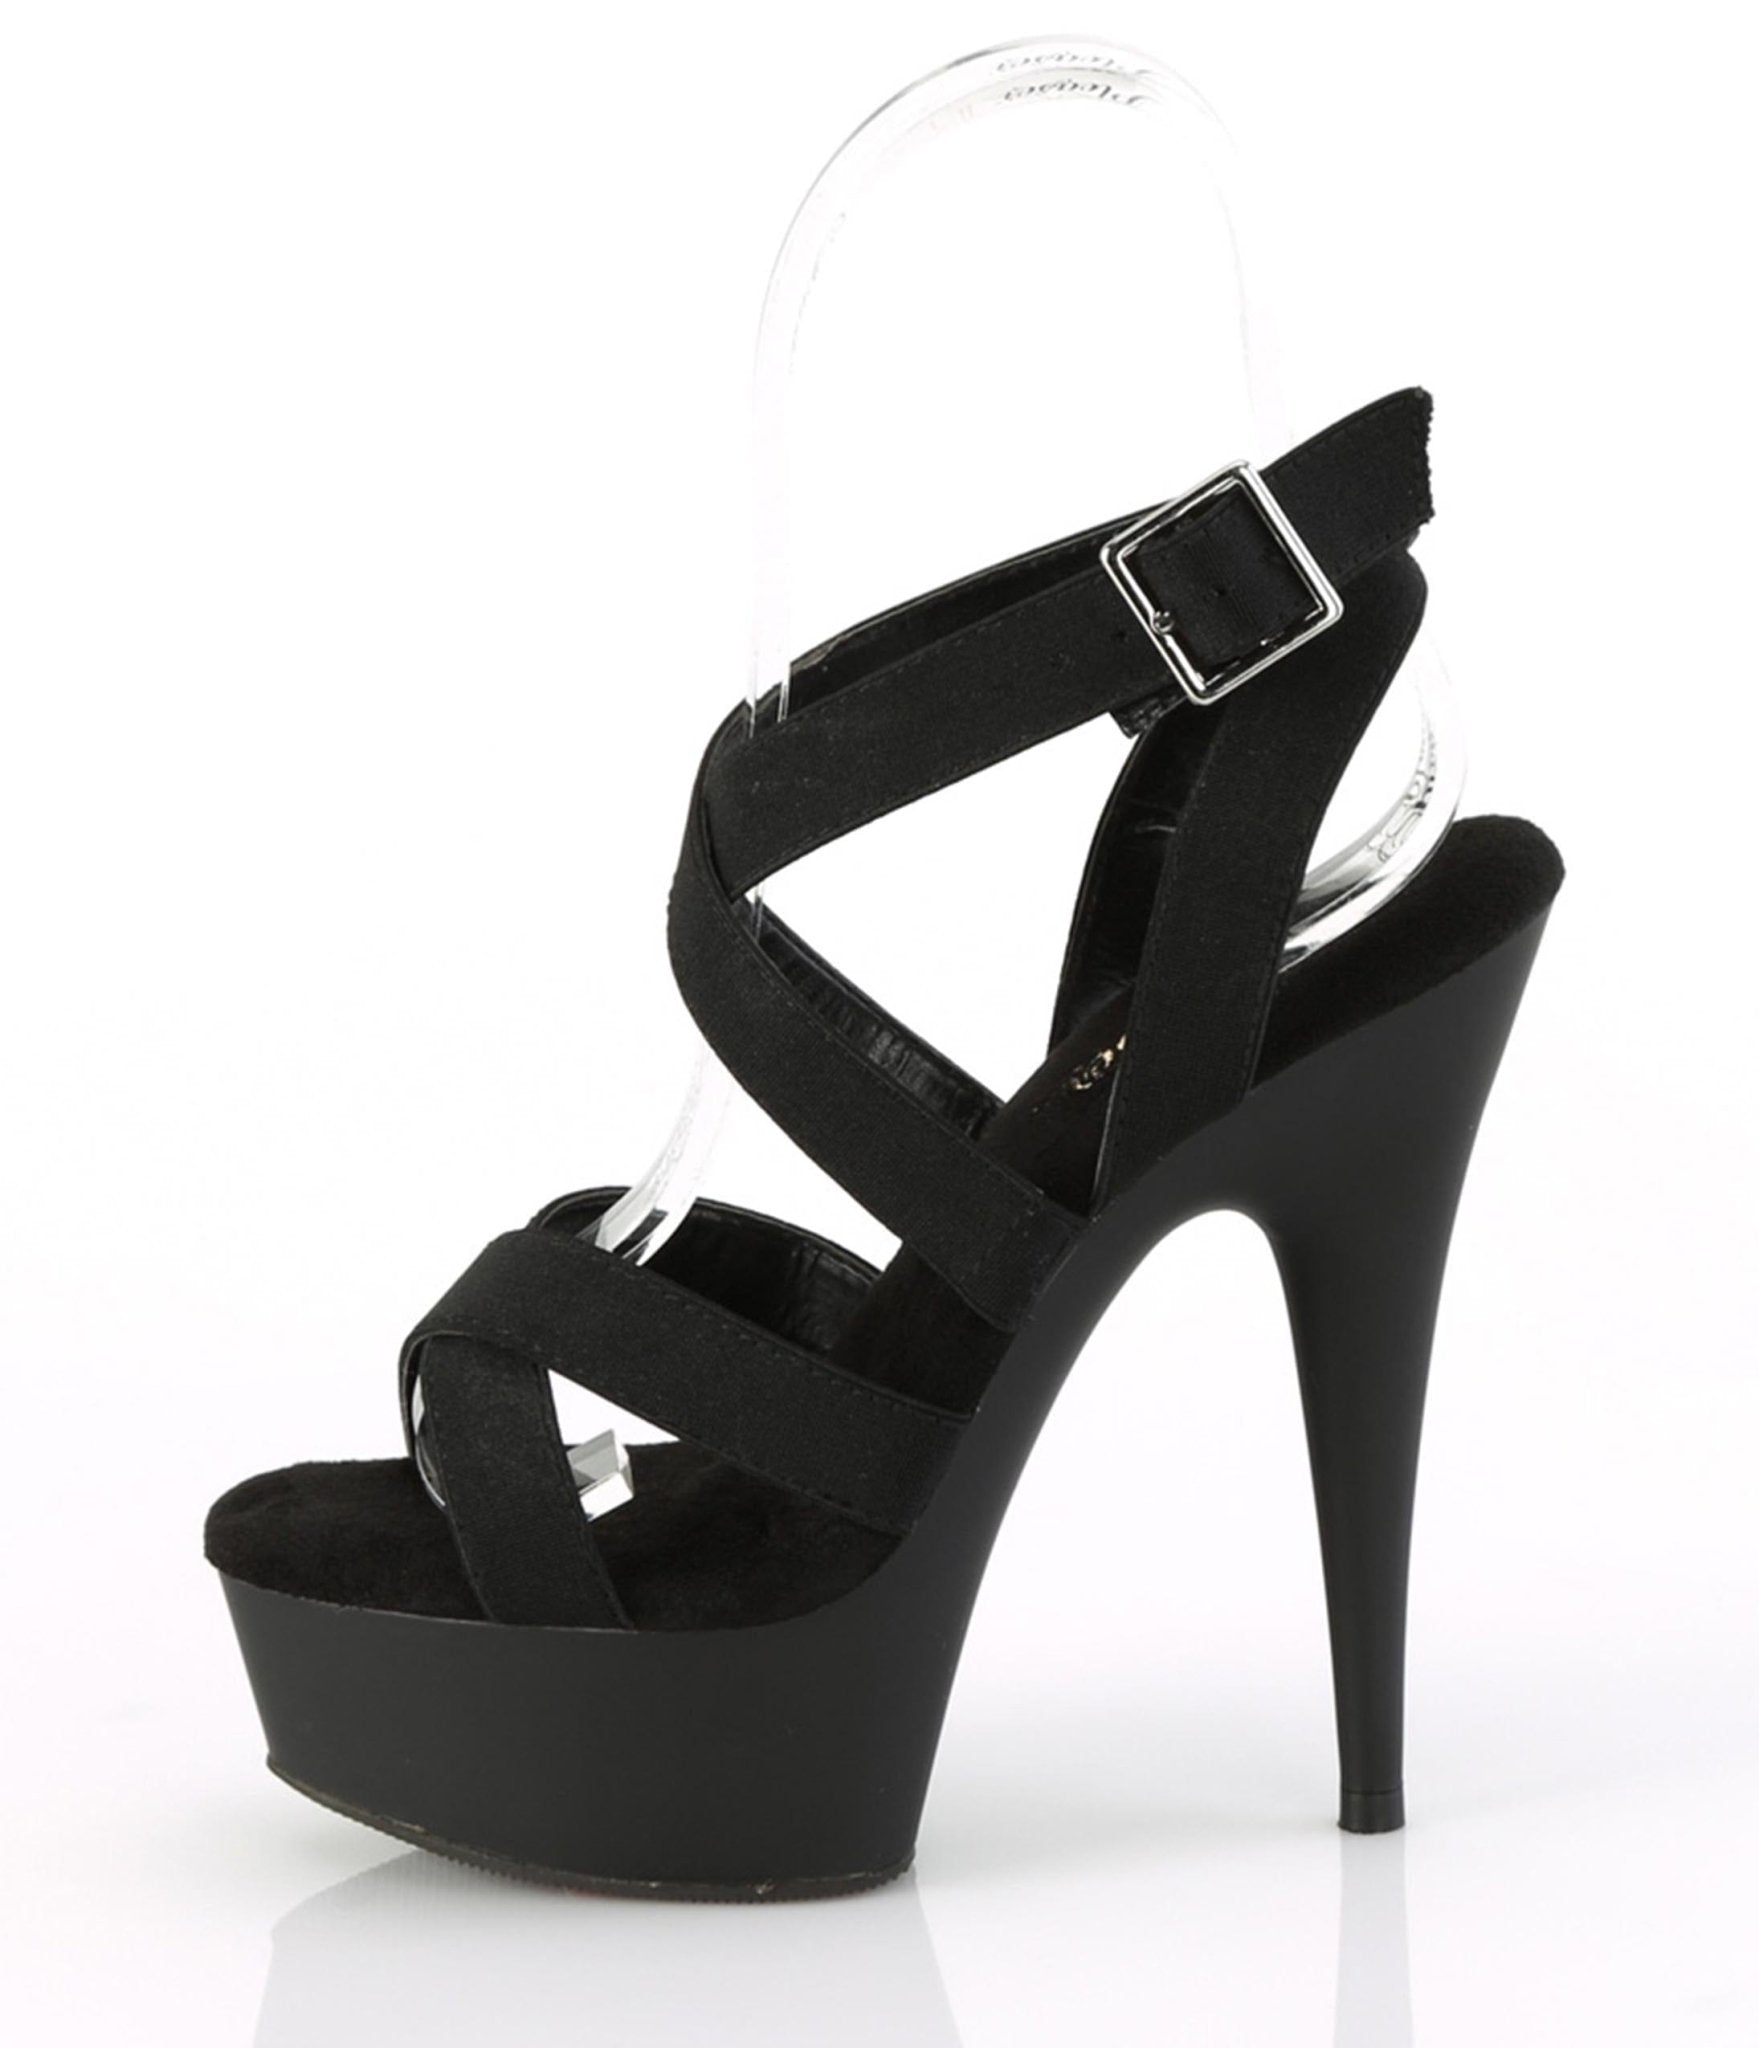 Giaro SCANT black shiny high heel pumps